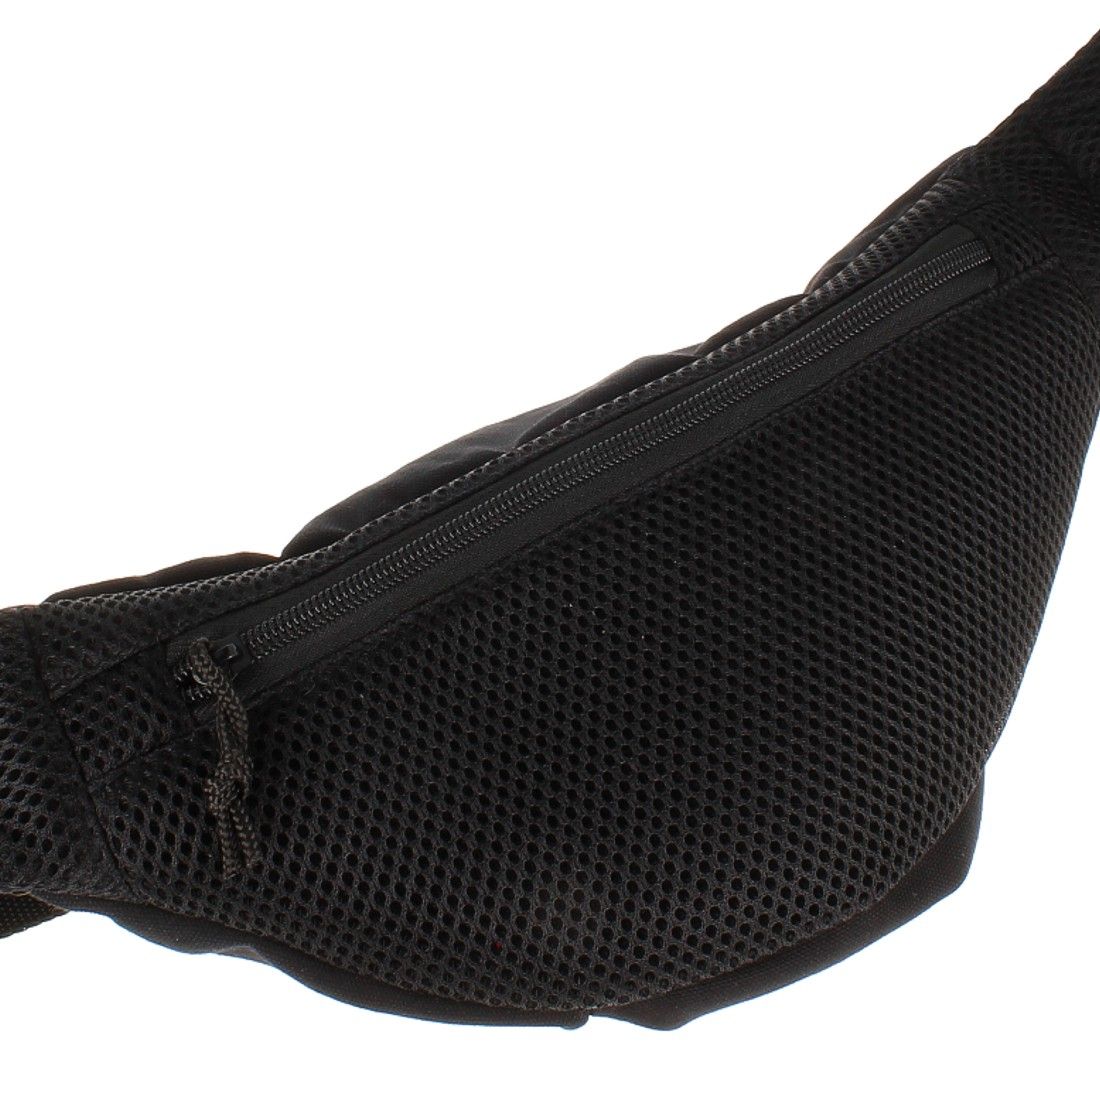 NUFA Belt Bags : Buy NUFA Specular Black Fanny Pack Bag Online